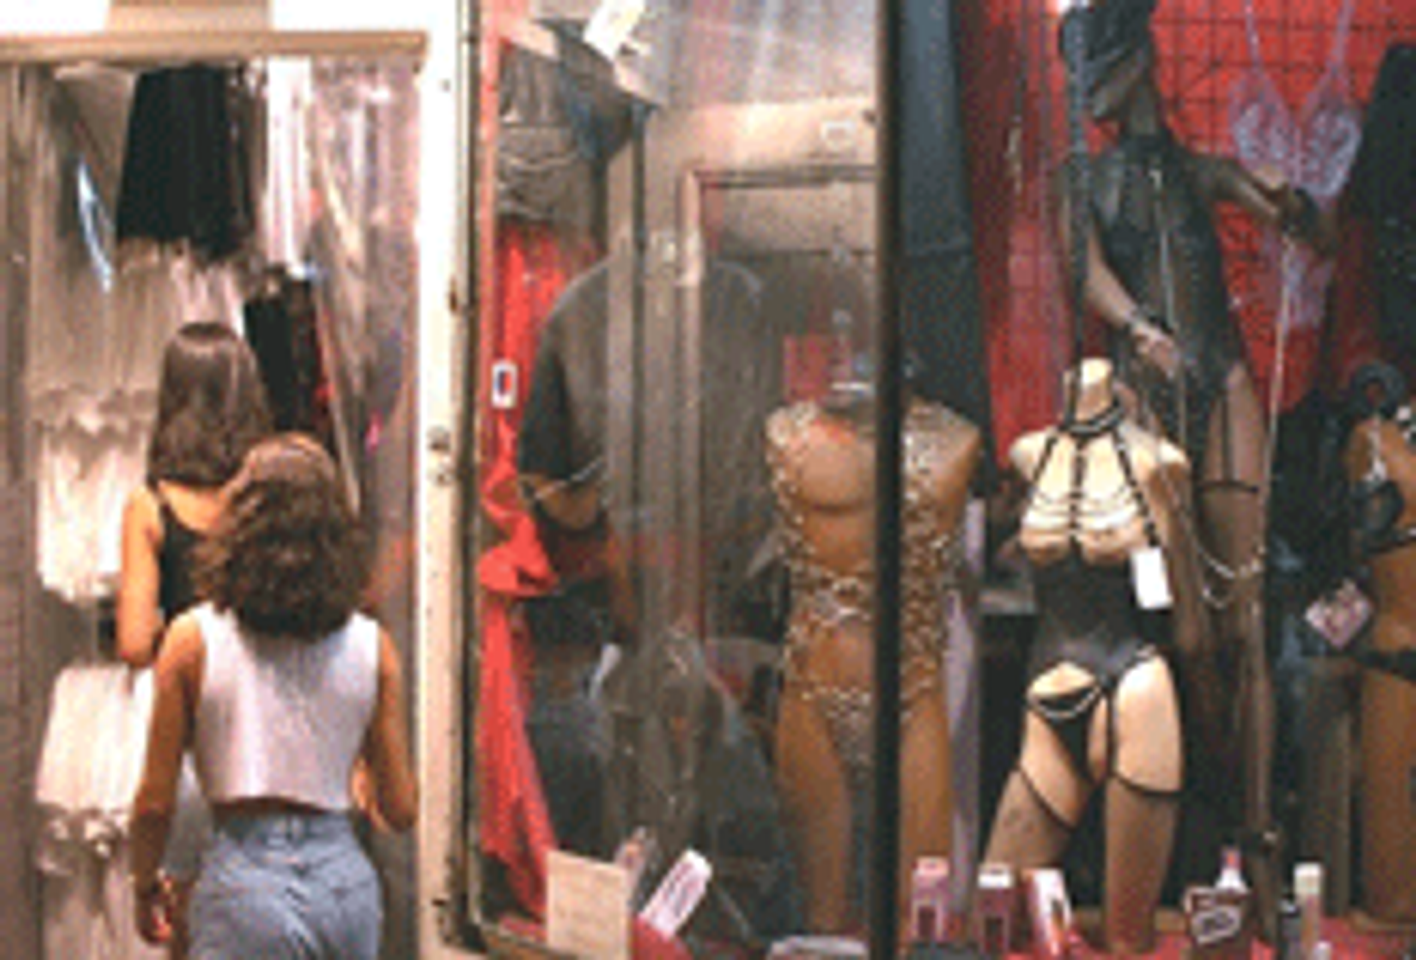 City Tentatively Approves Sex Shop Restrictions